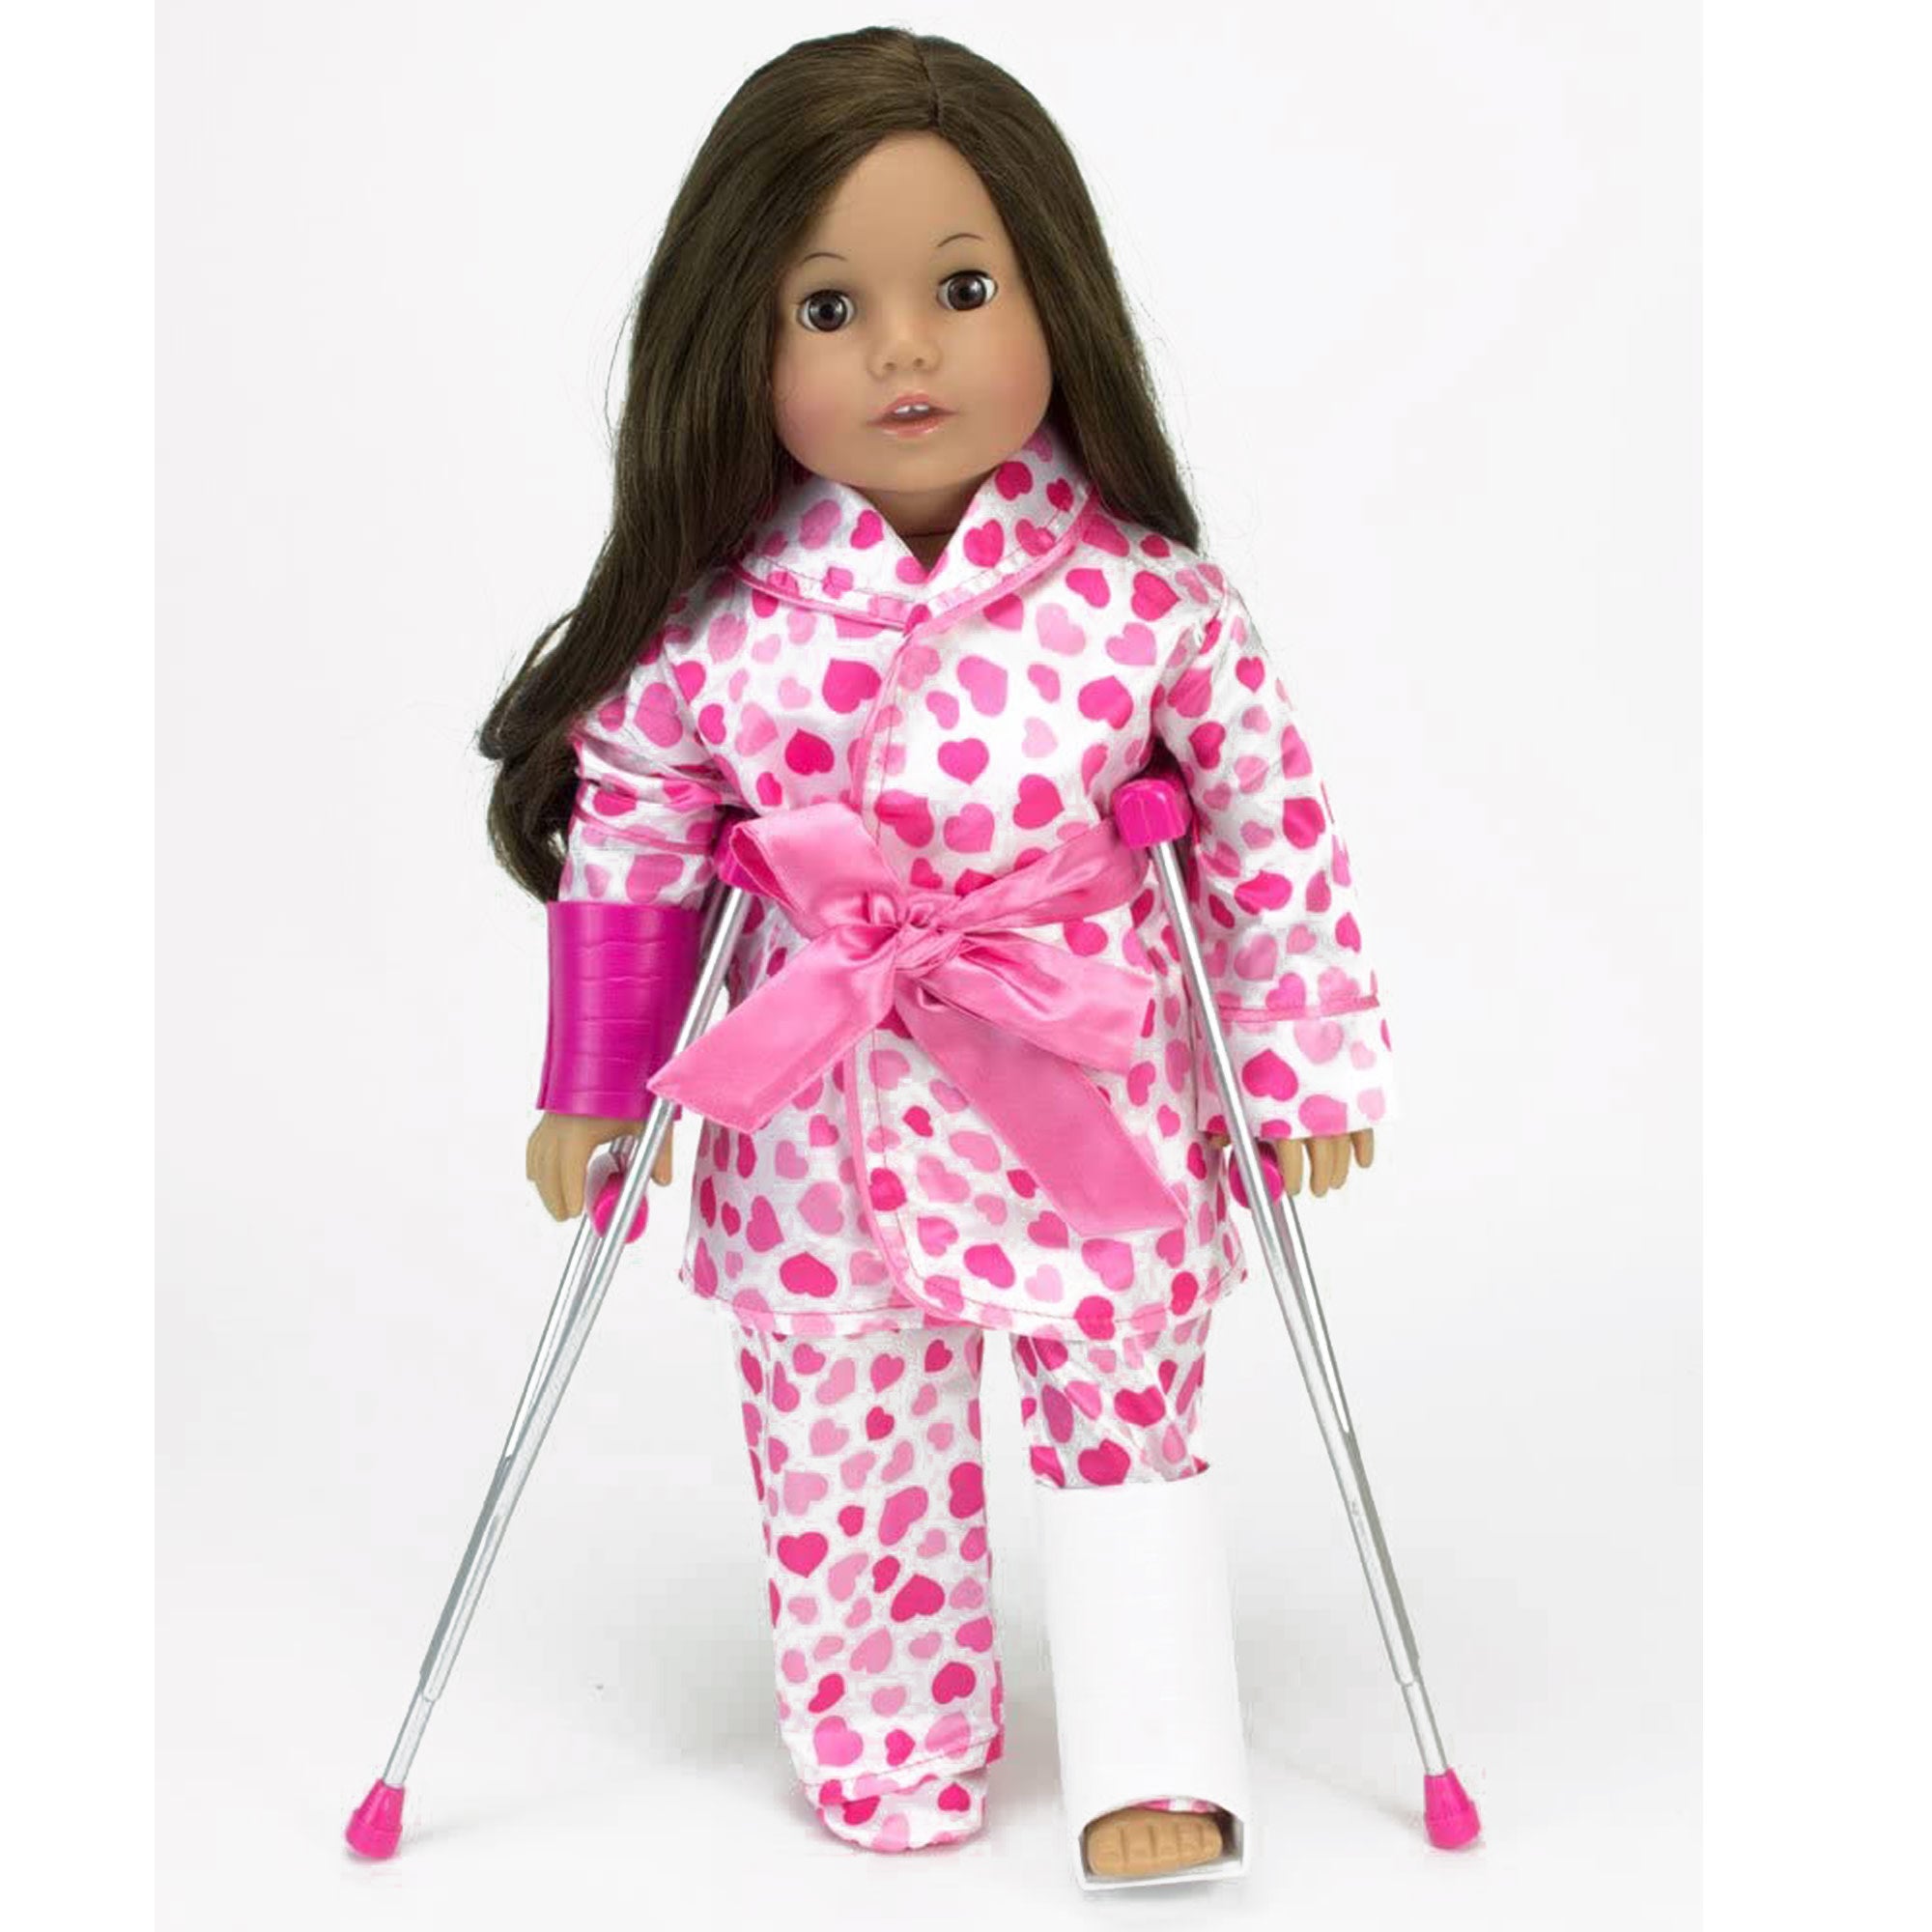 Sophias Doll Cast & Crutches Accessories Set for 18" Dolls